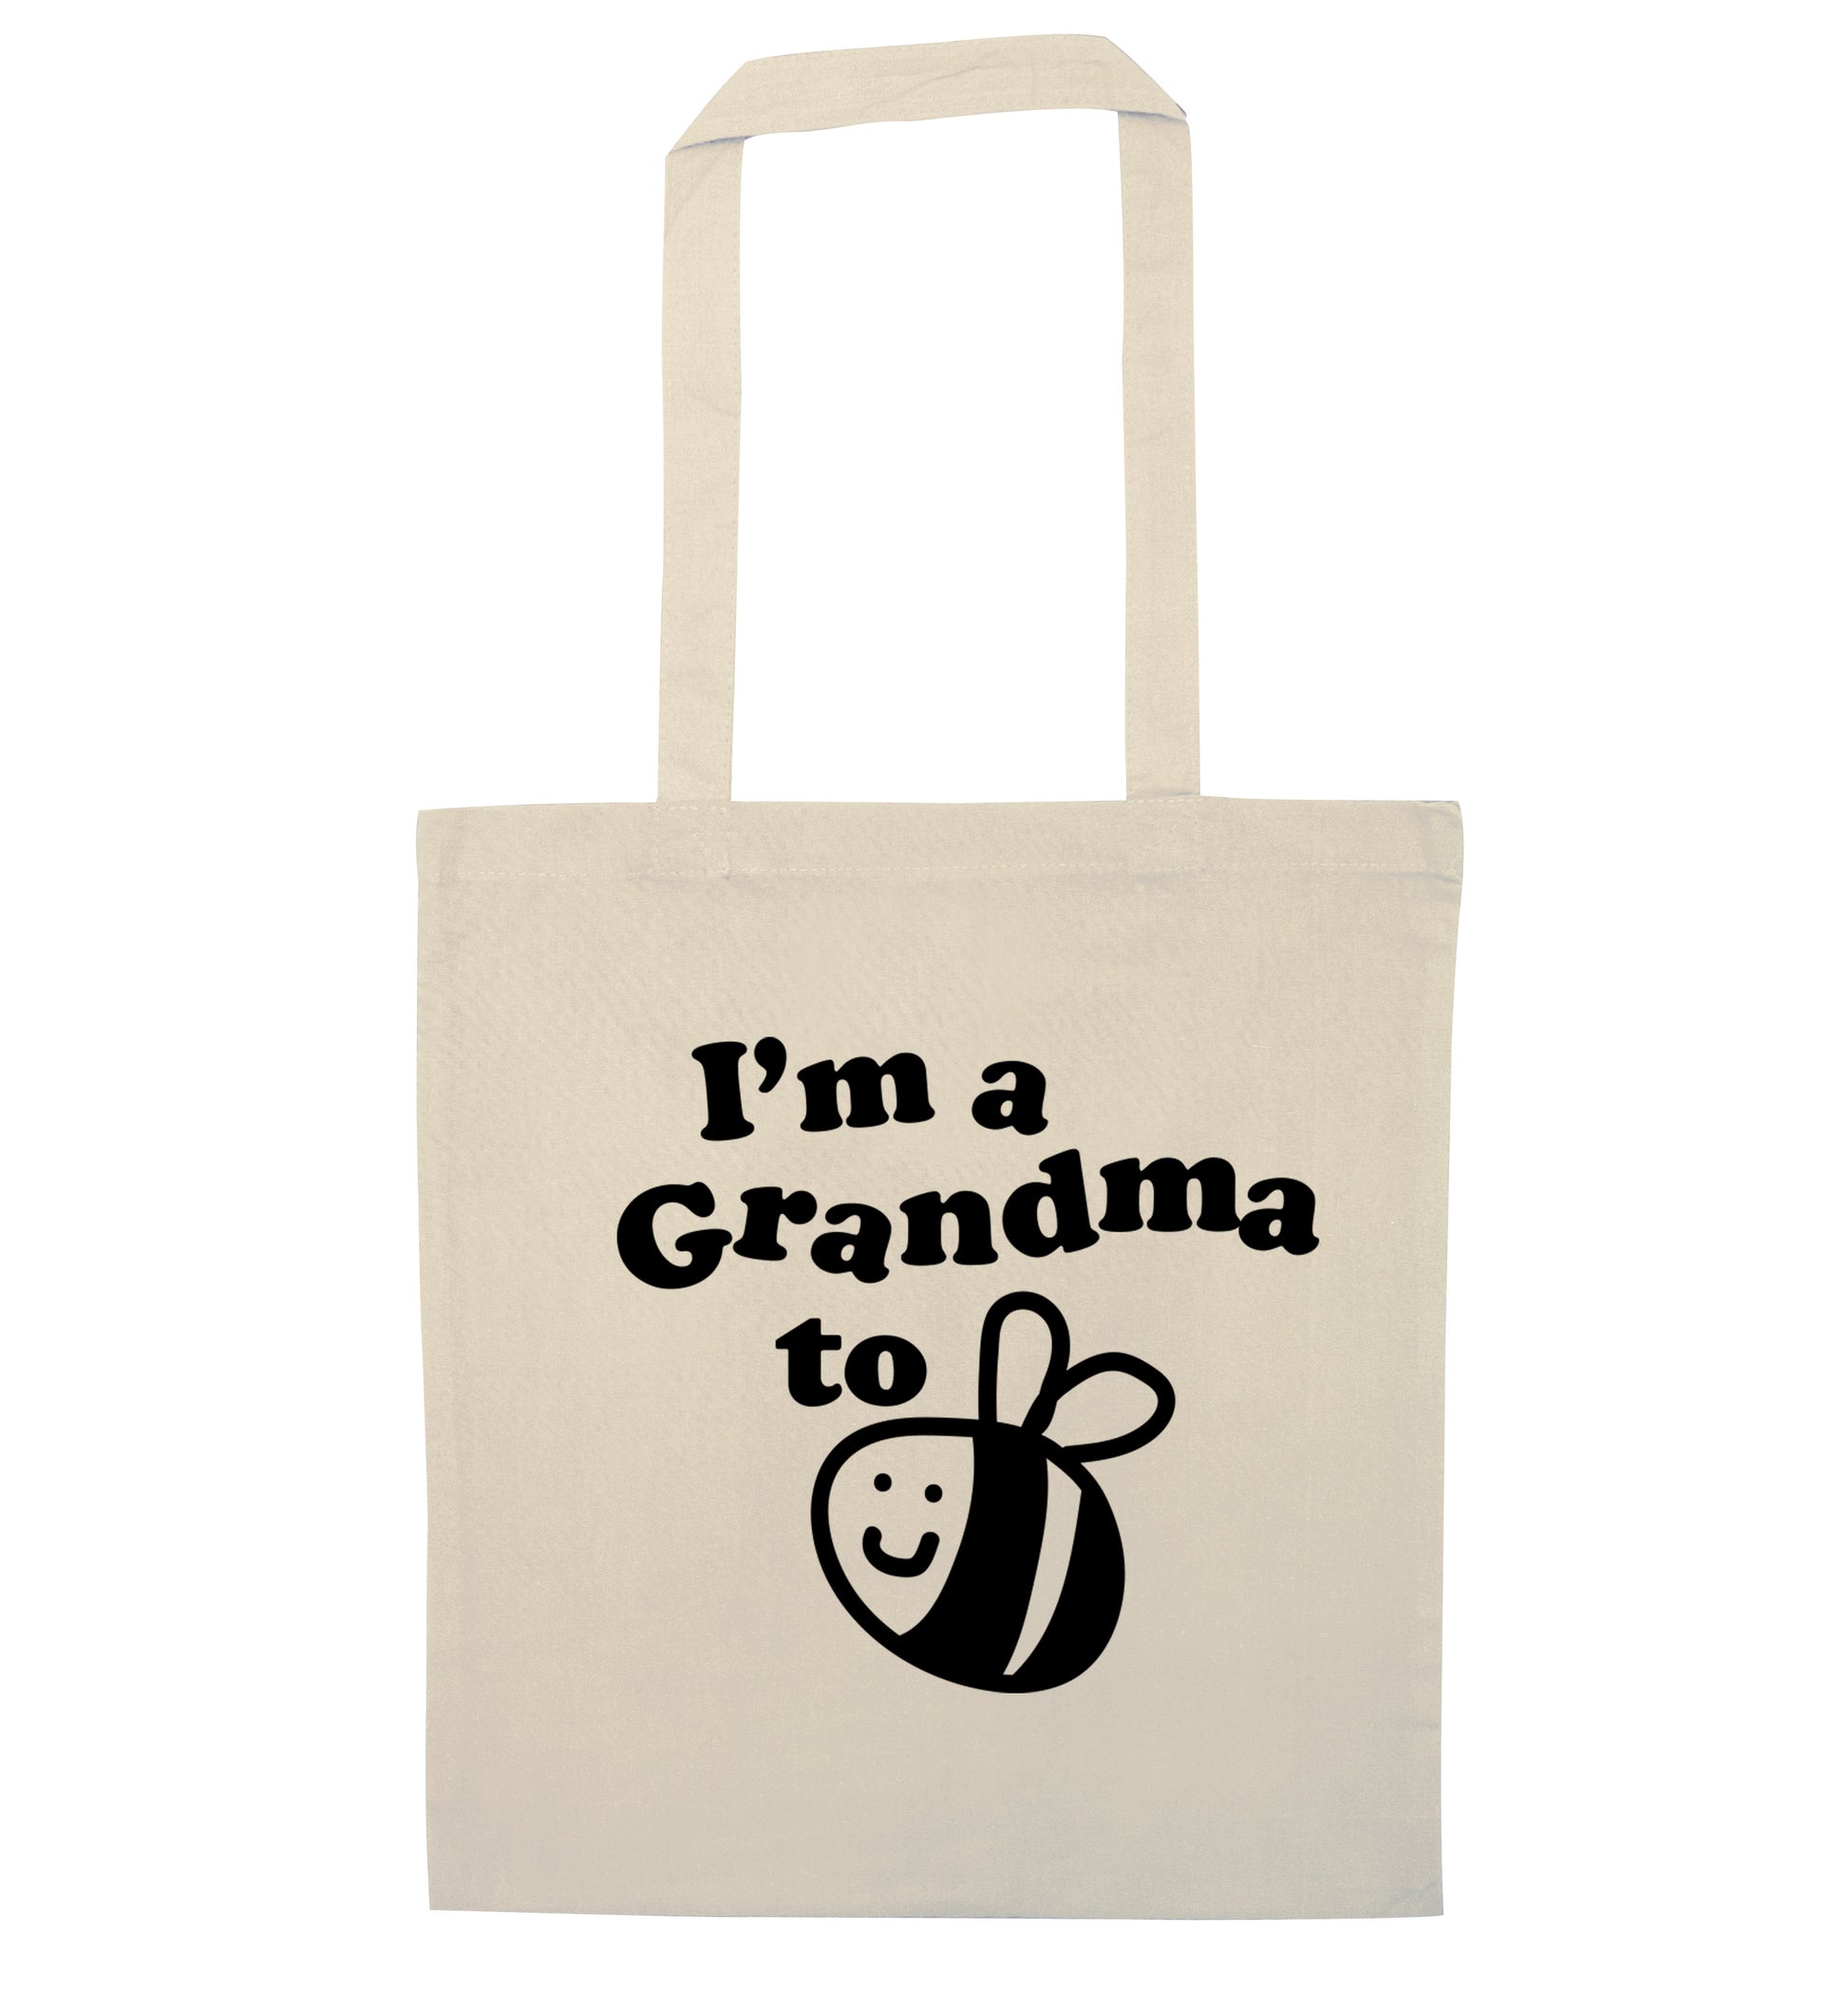 I'm a grandma to be natural tote bag